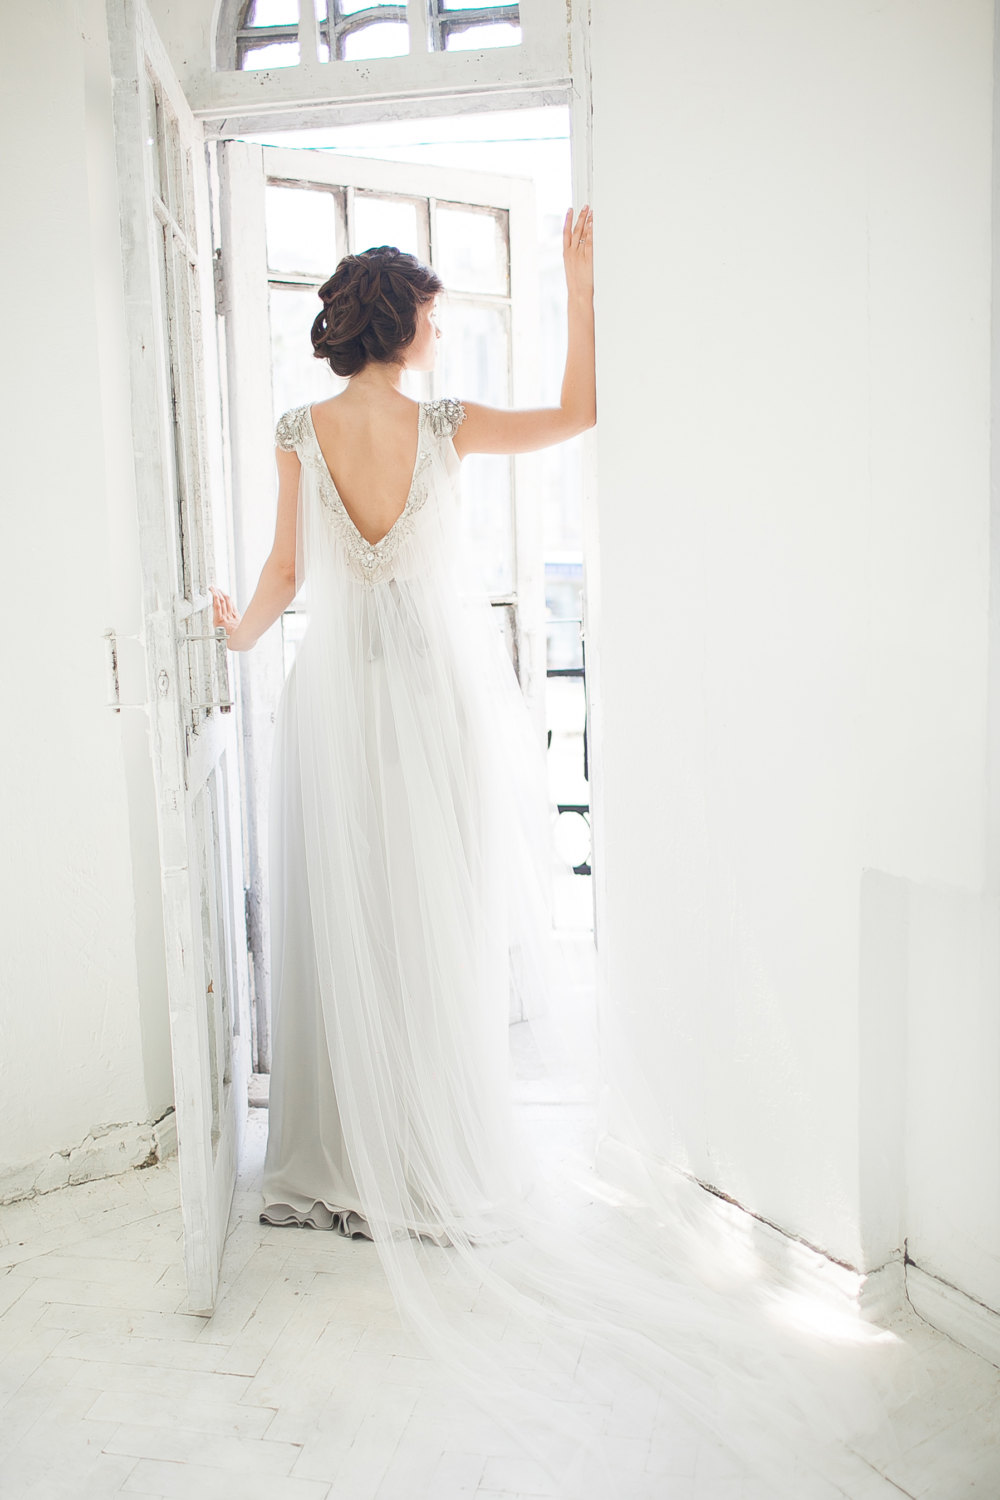 'Jasmine' Budget Friendly & Beautiful Wedding Dress Under